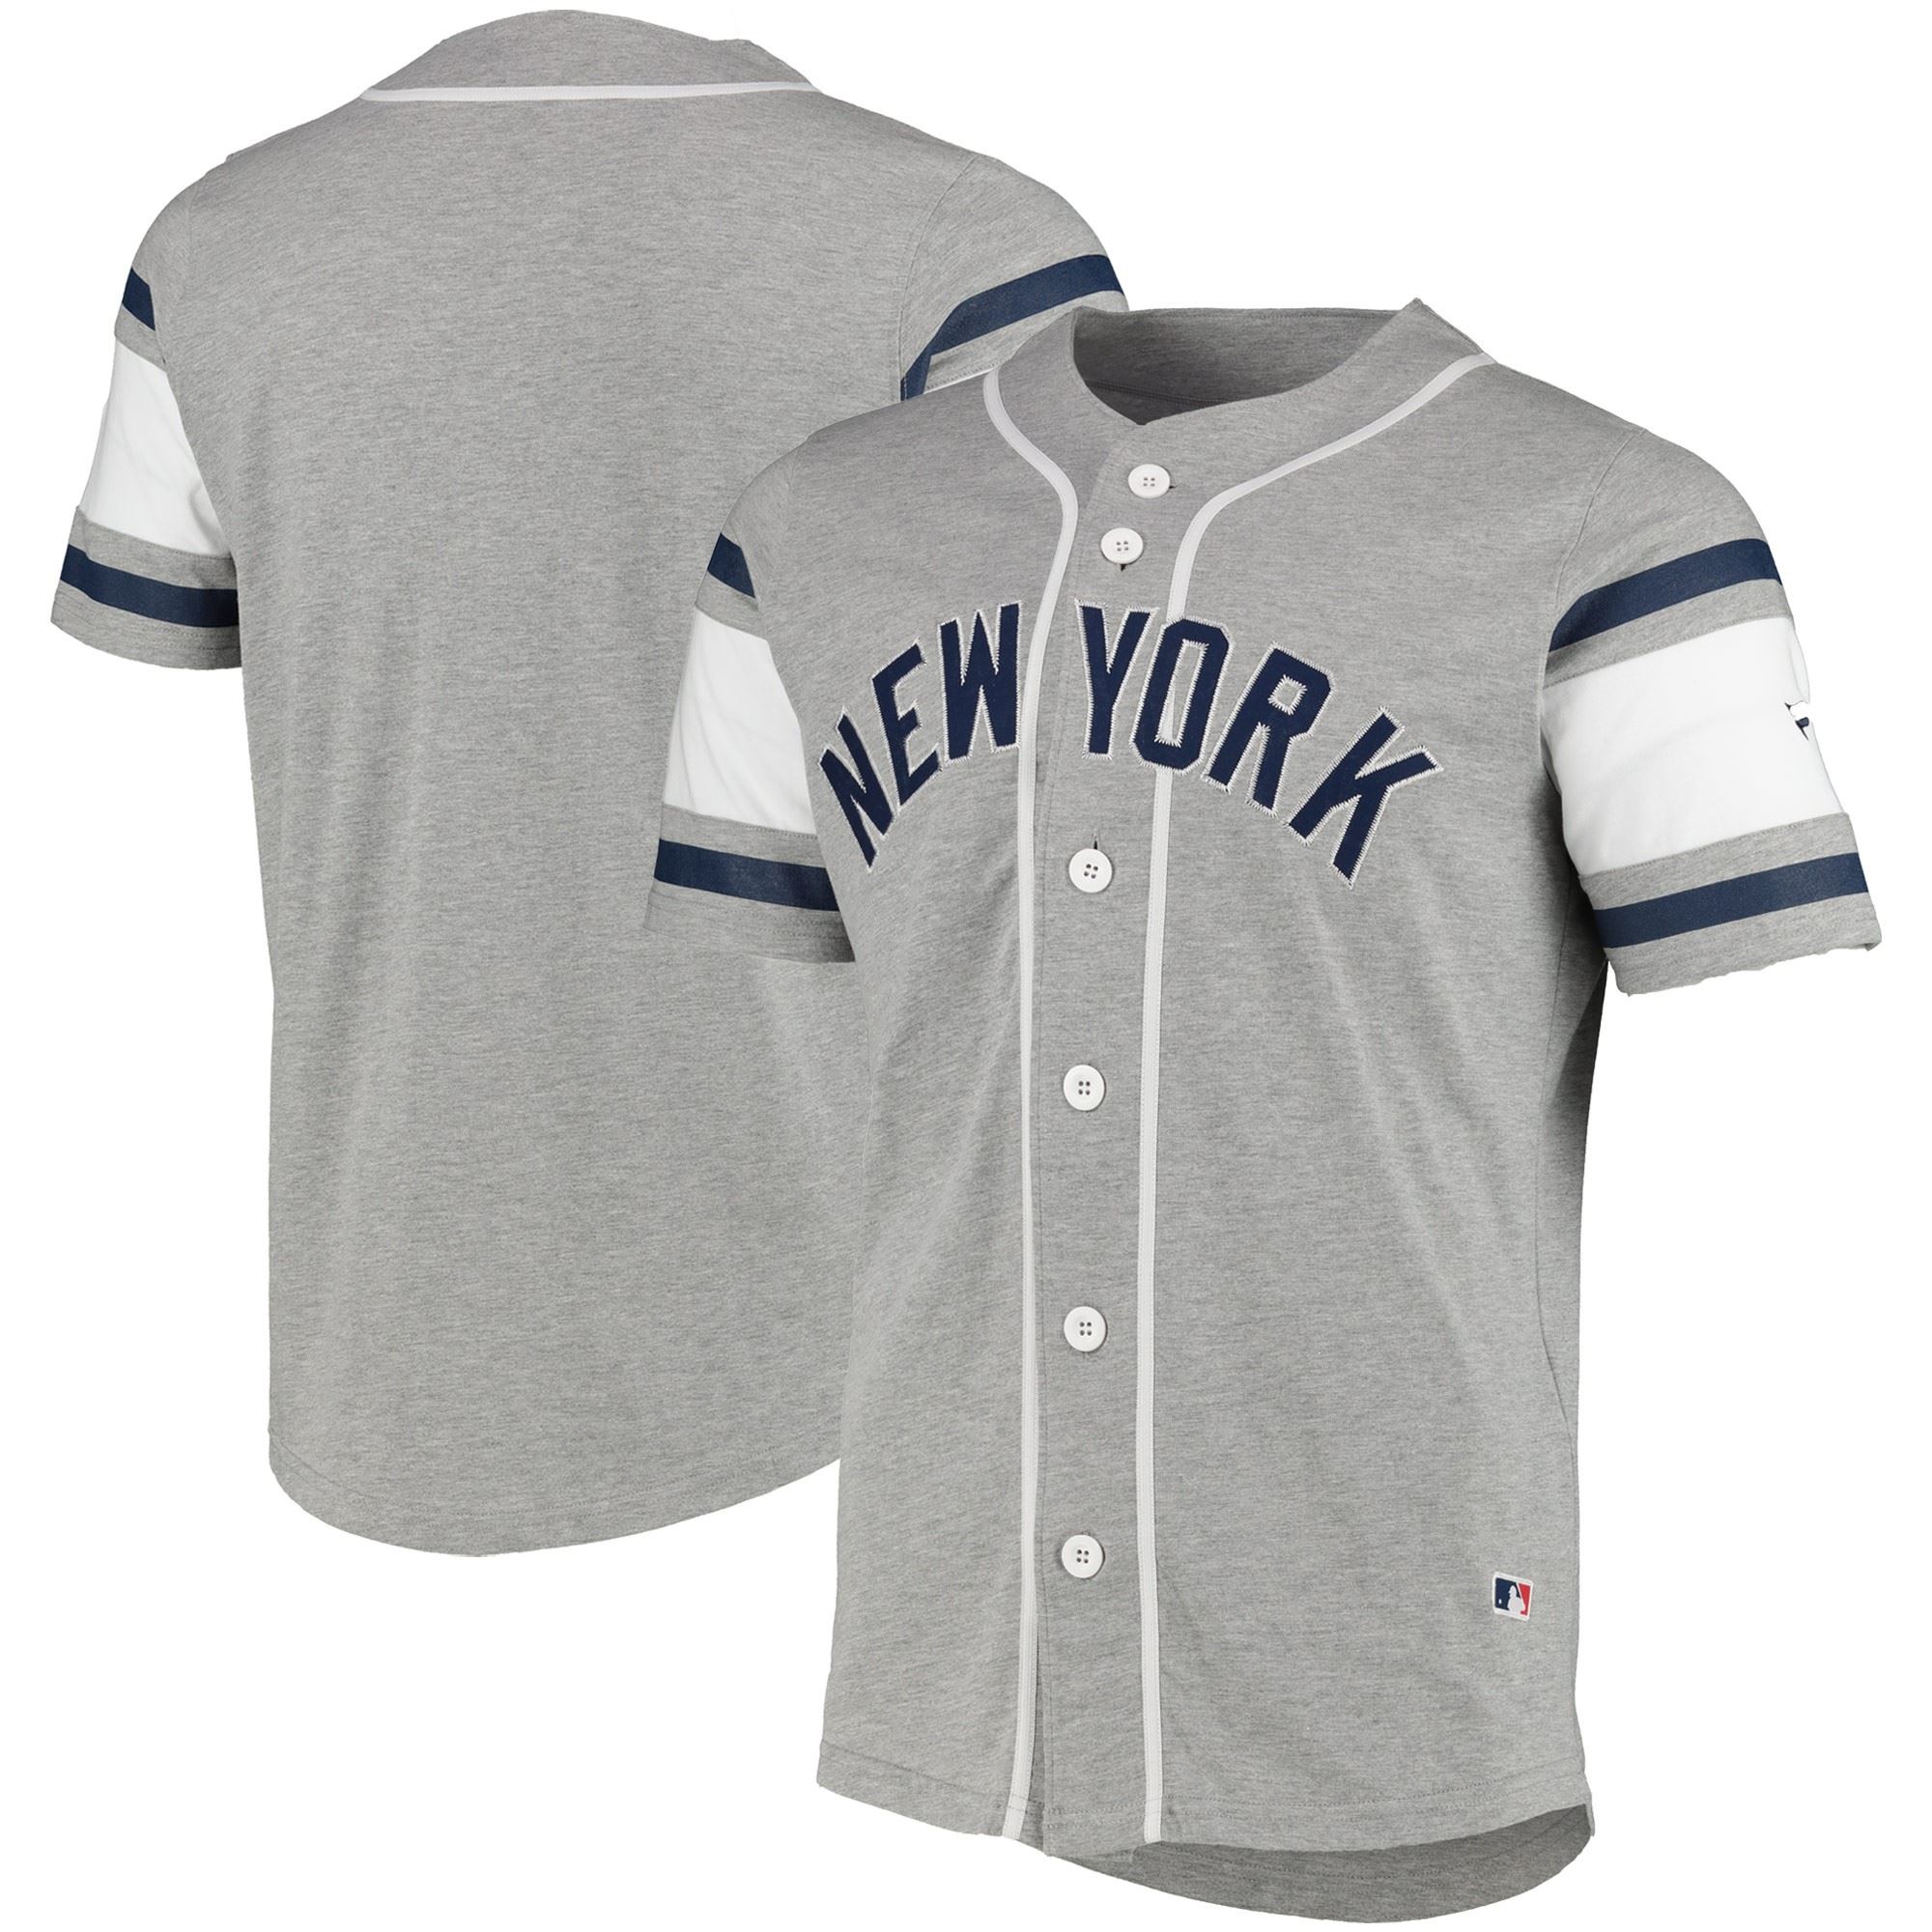 New York Yankees MLB Cotton Supporters Jersey Fanatics